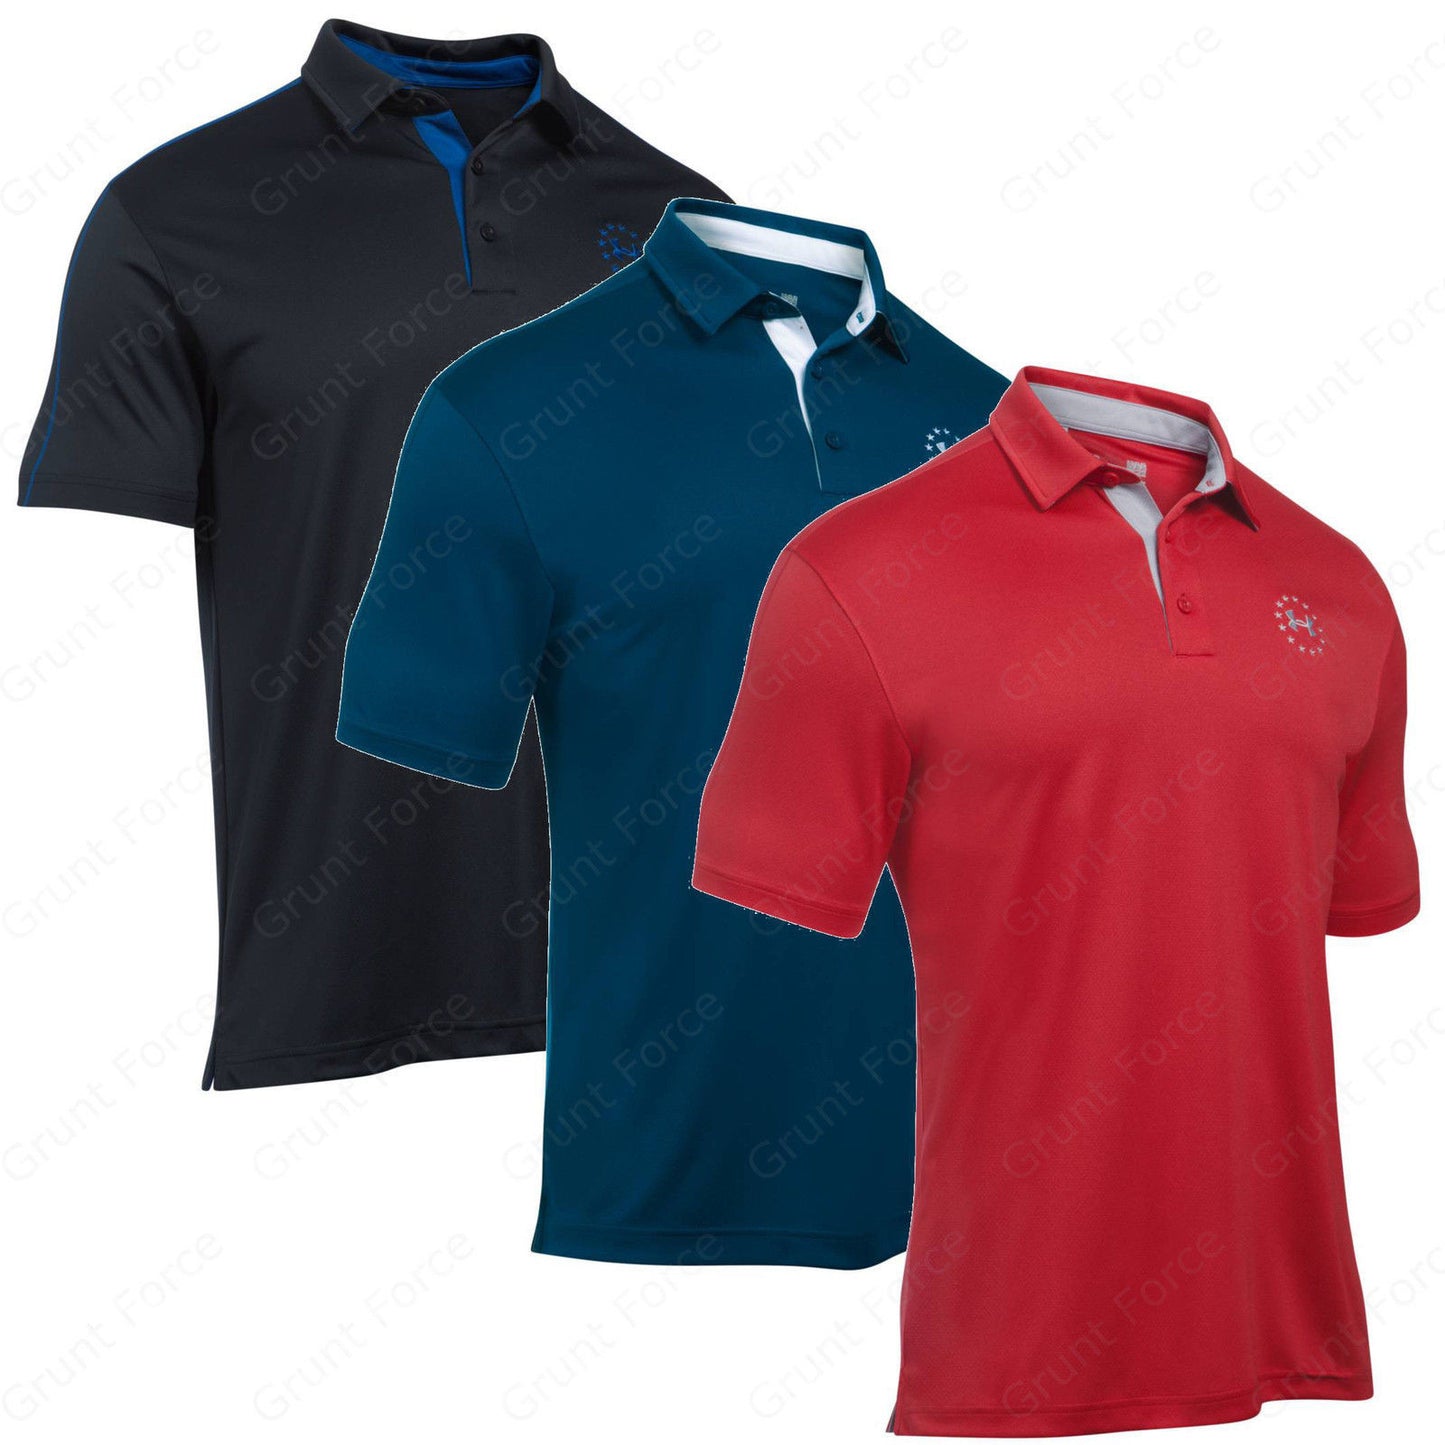 Under Armour Freedom Tech Polo - UA Men's Tactical Short Sleeve Polo Shirt